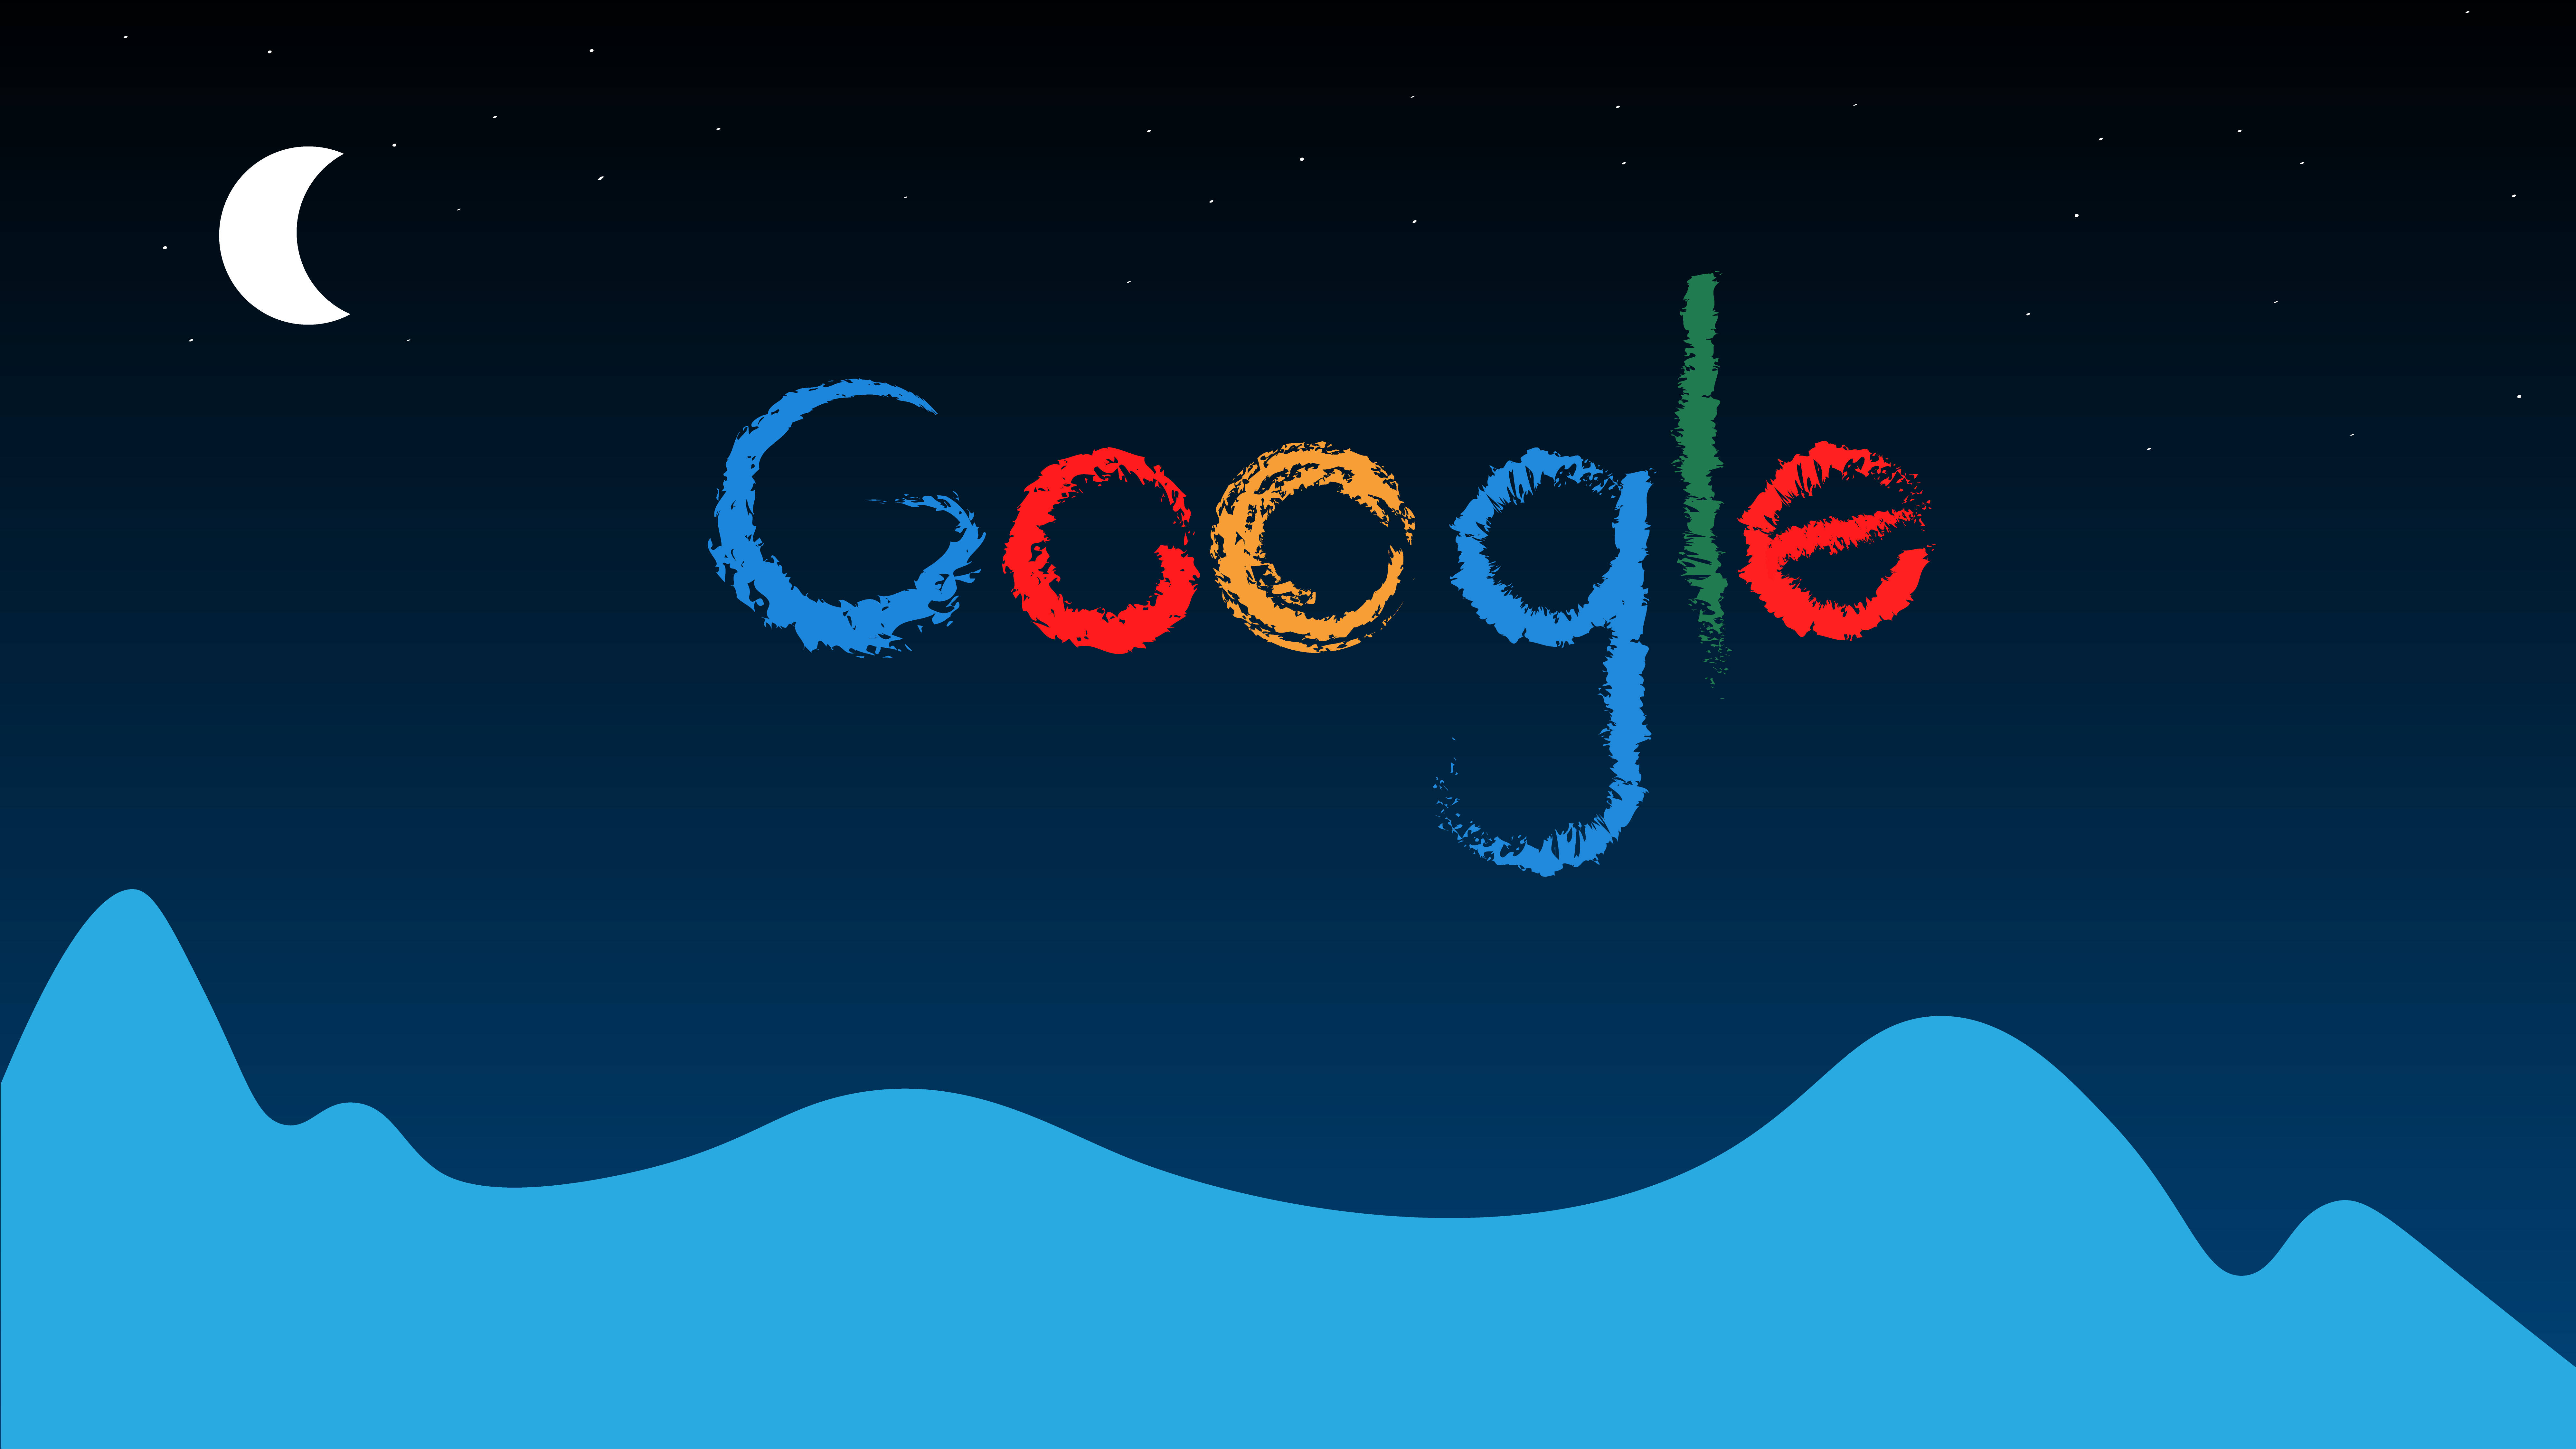 Google Starry Night Background